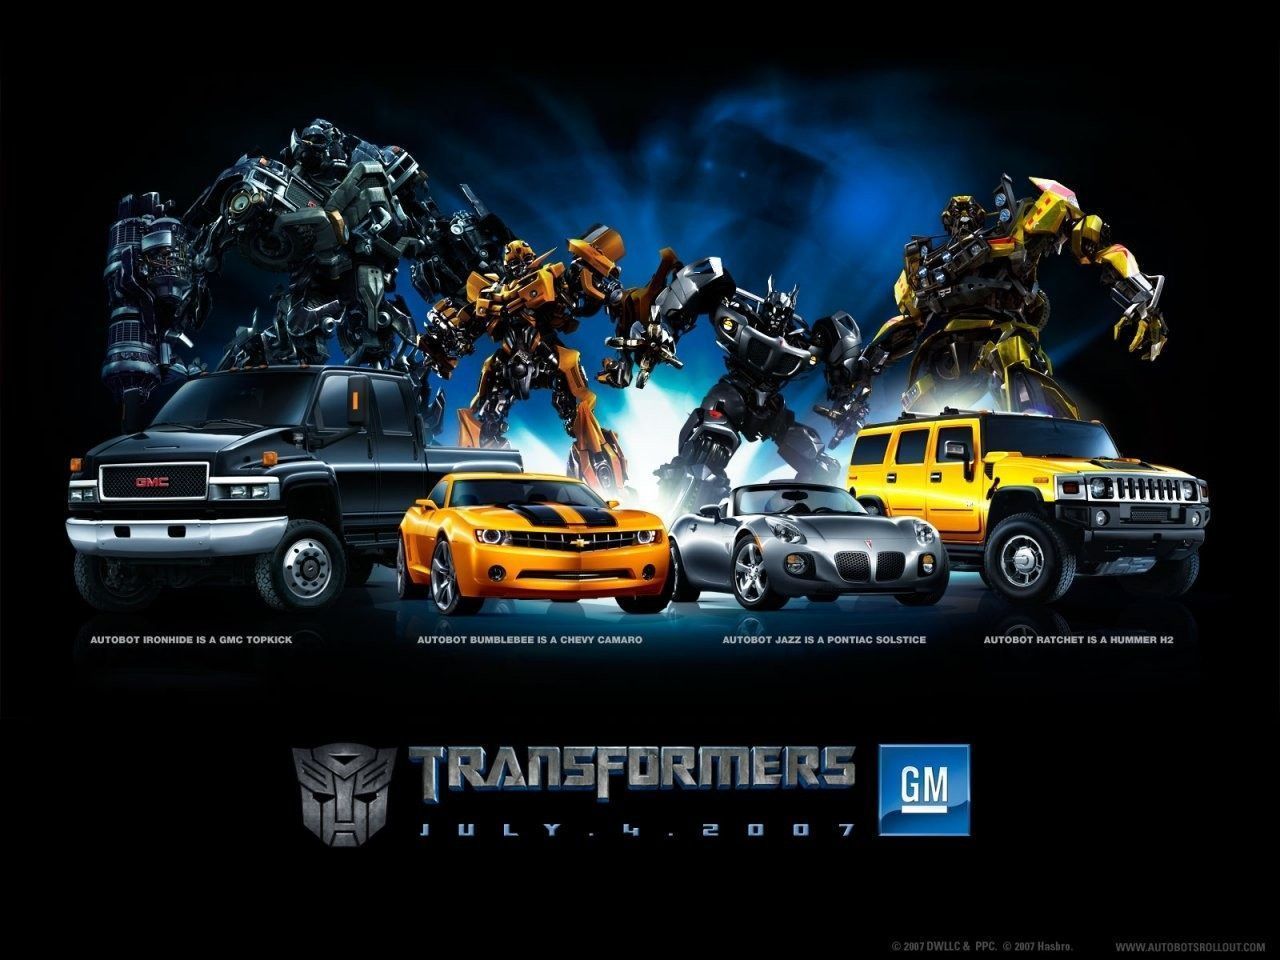 Autobots Wallpaper - Transformers Wallpaper 24079233 - Fanpop